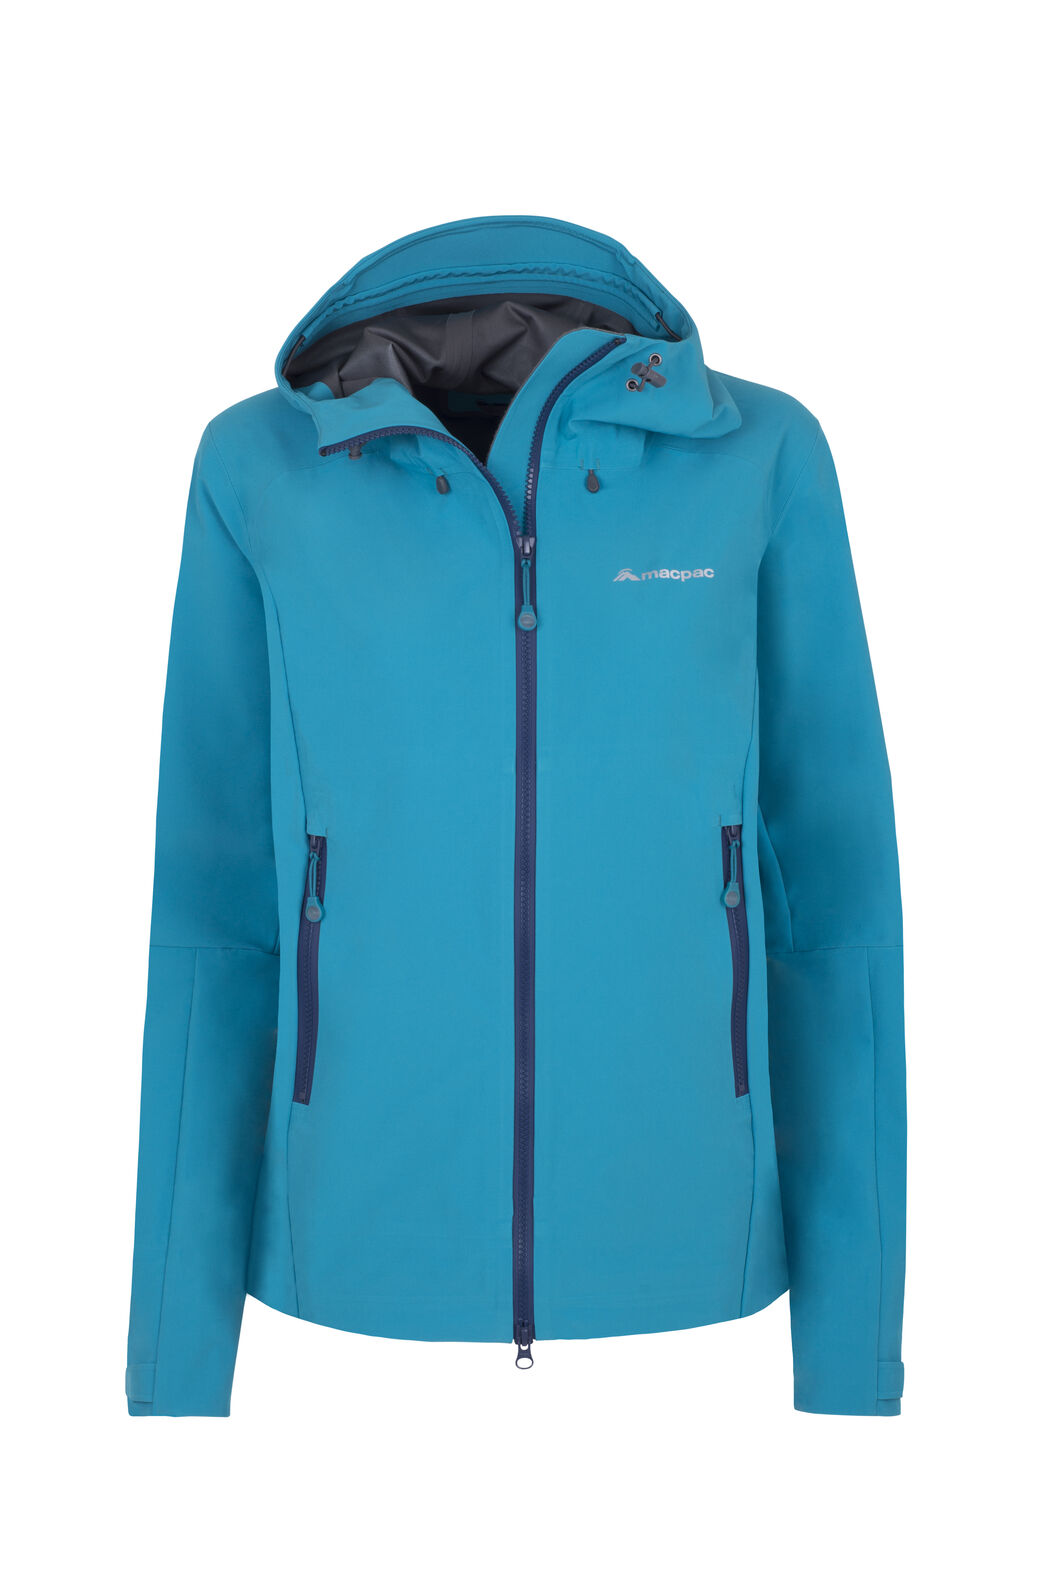 Macpac Fitzroy Alpine Series Softshell Jacket — Women's | Macpac